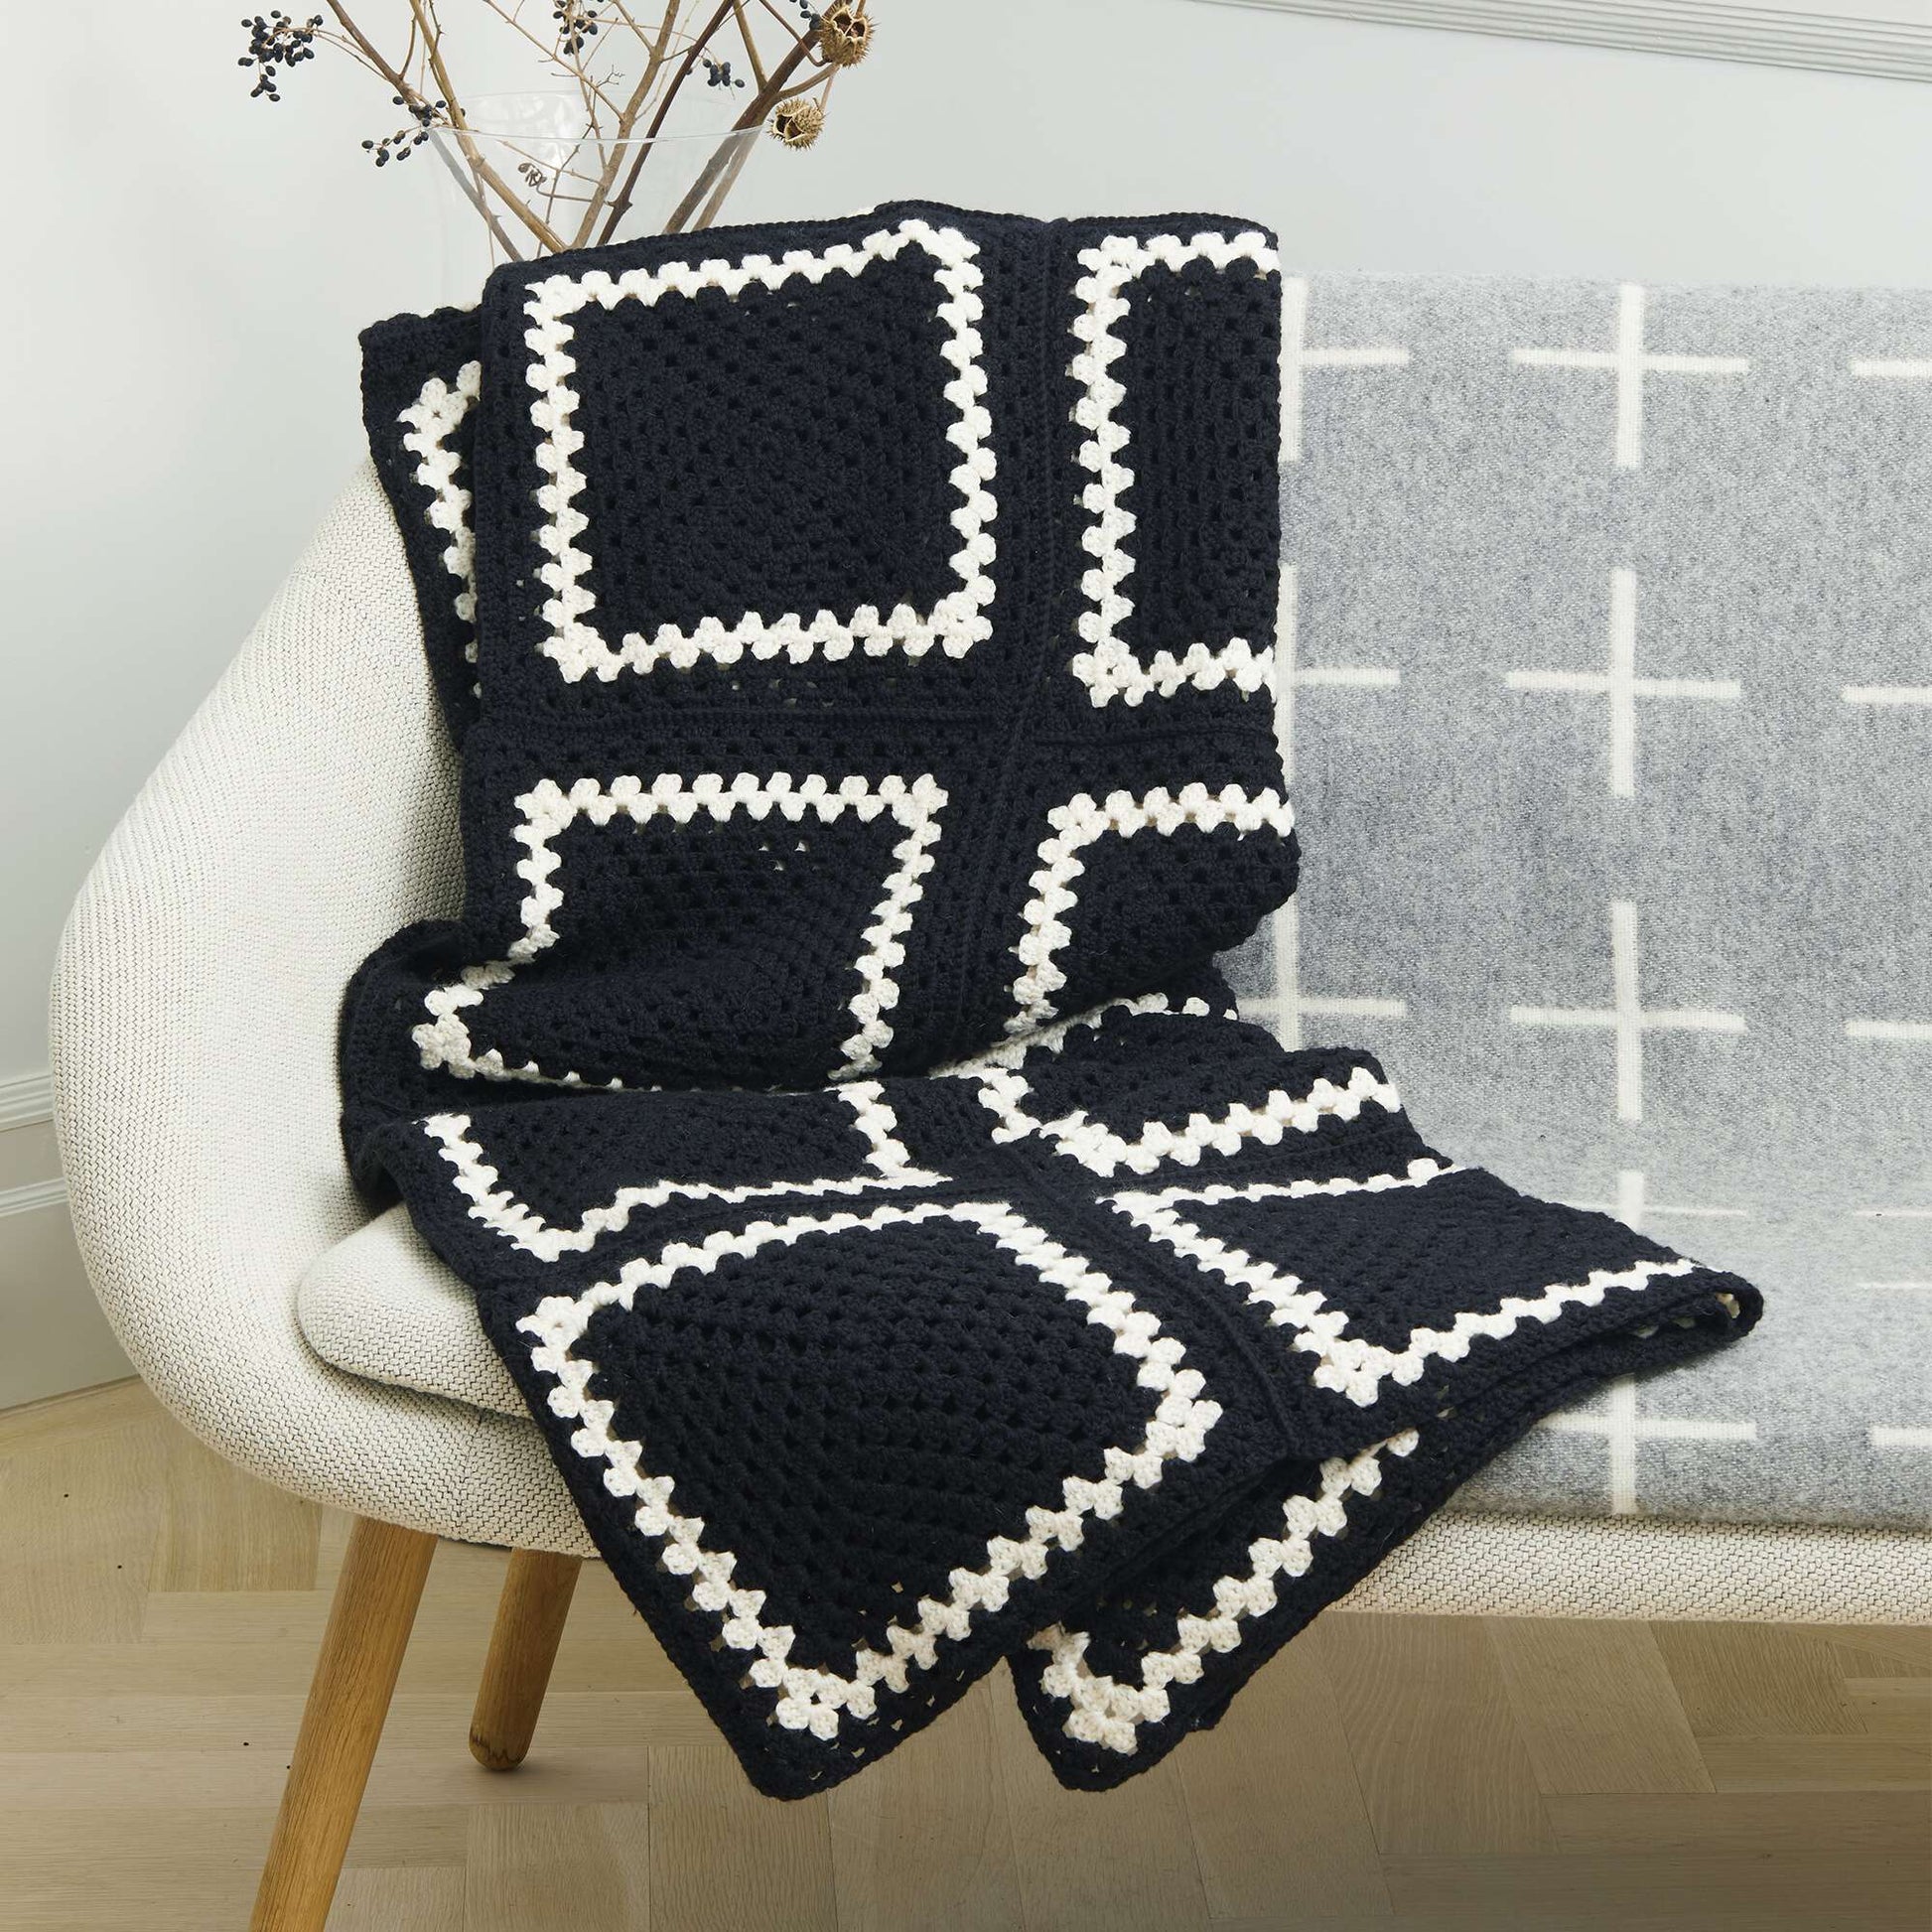 Stitch Club Jane's Granny Square Crochet Blanket + Tutorial Pattern